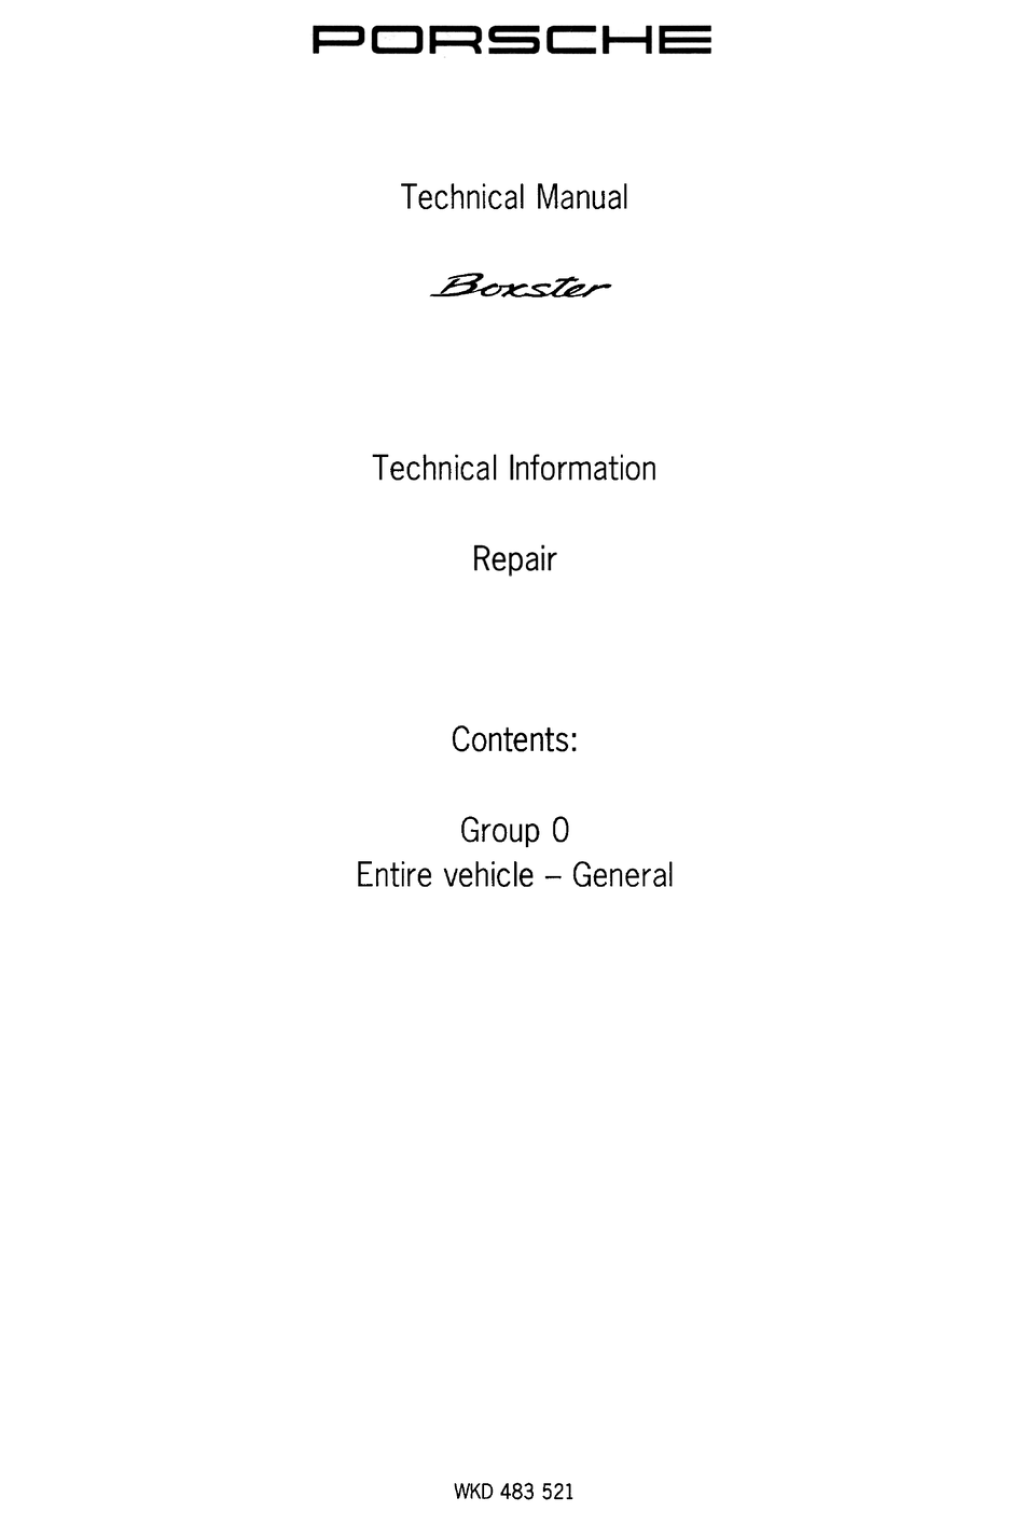 Picture of: PORSCHE BOXSTER  TECHNICAL MANUAL Pdf Download  ManualsLib